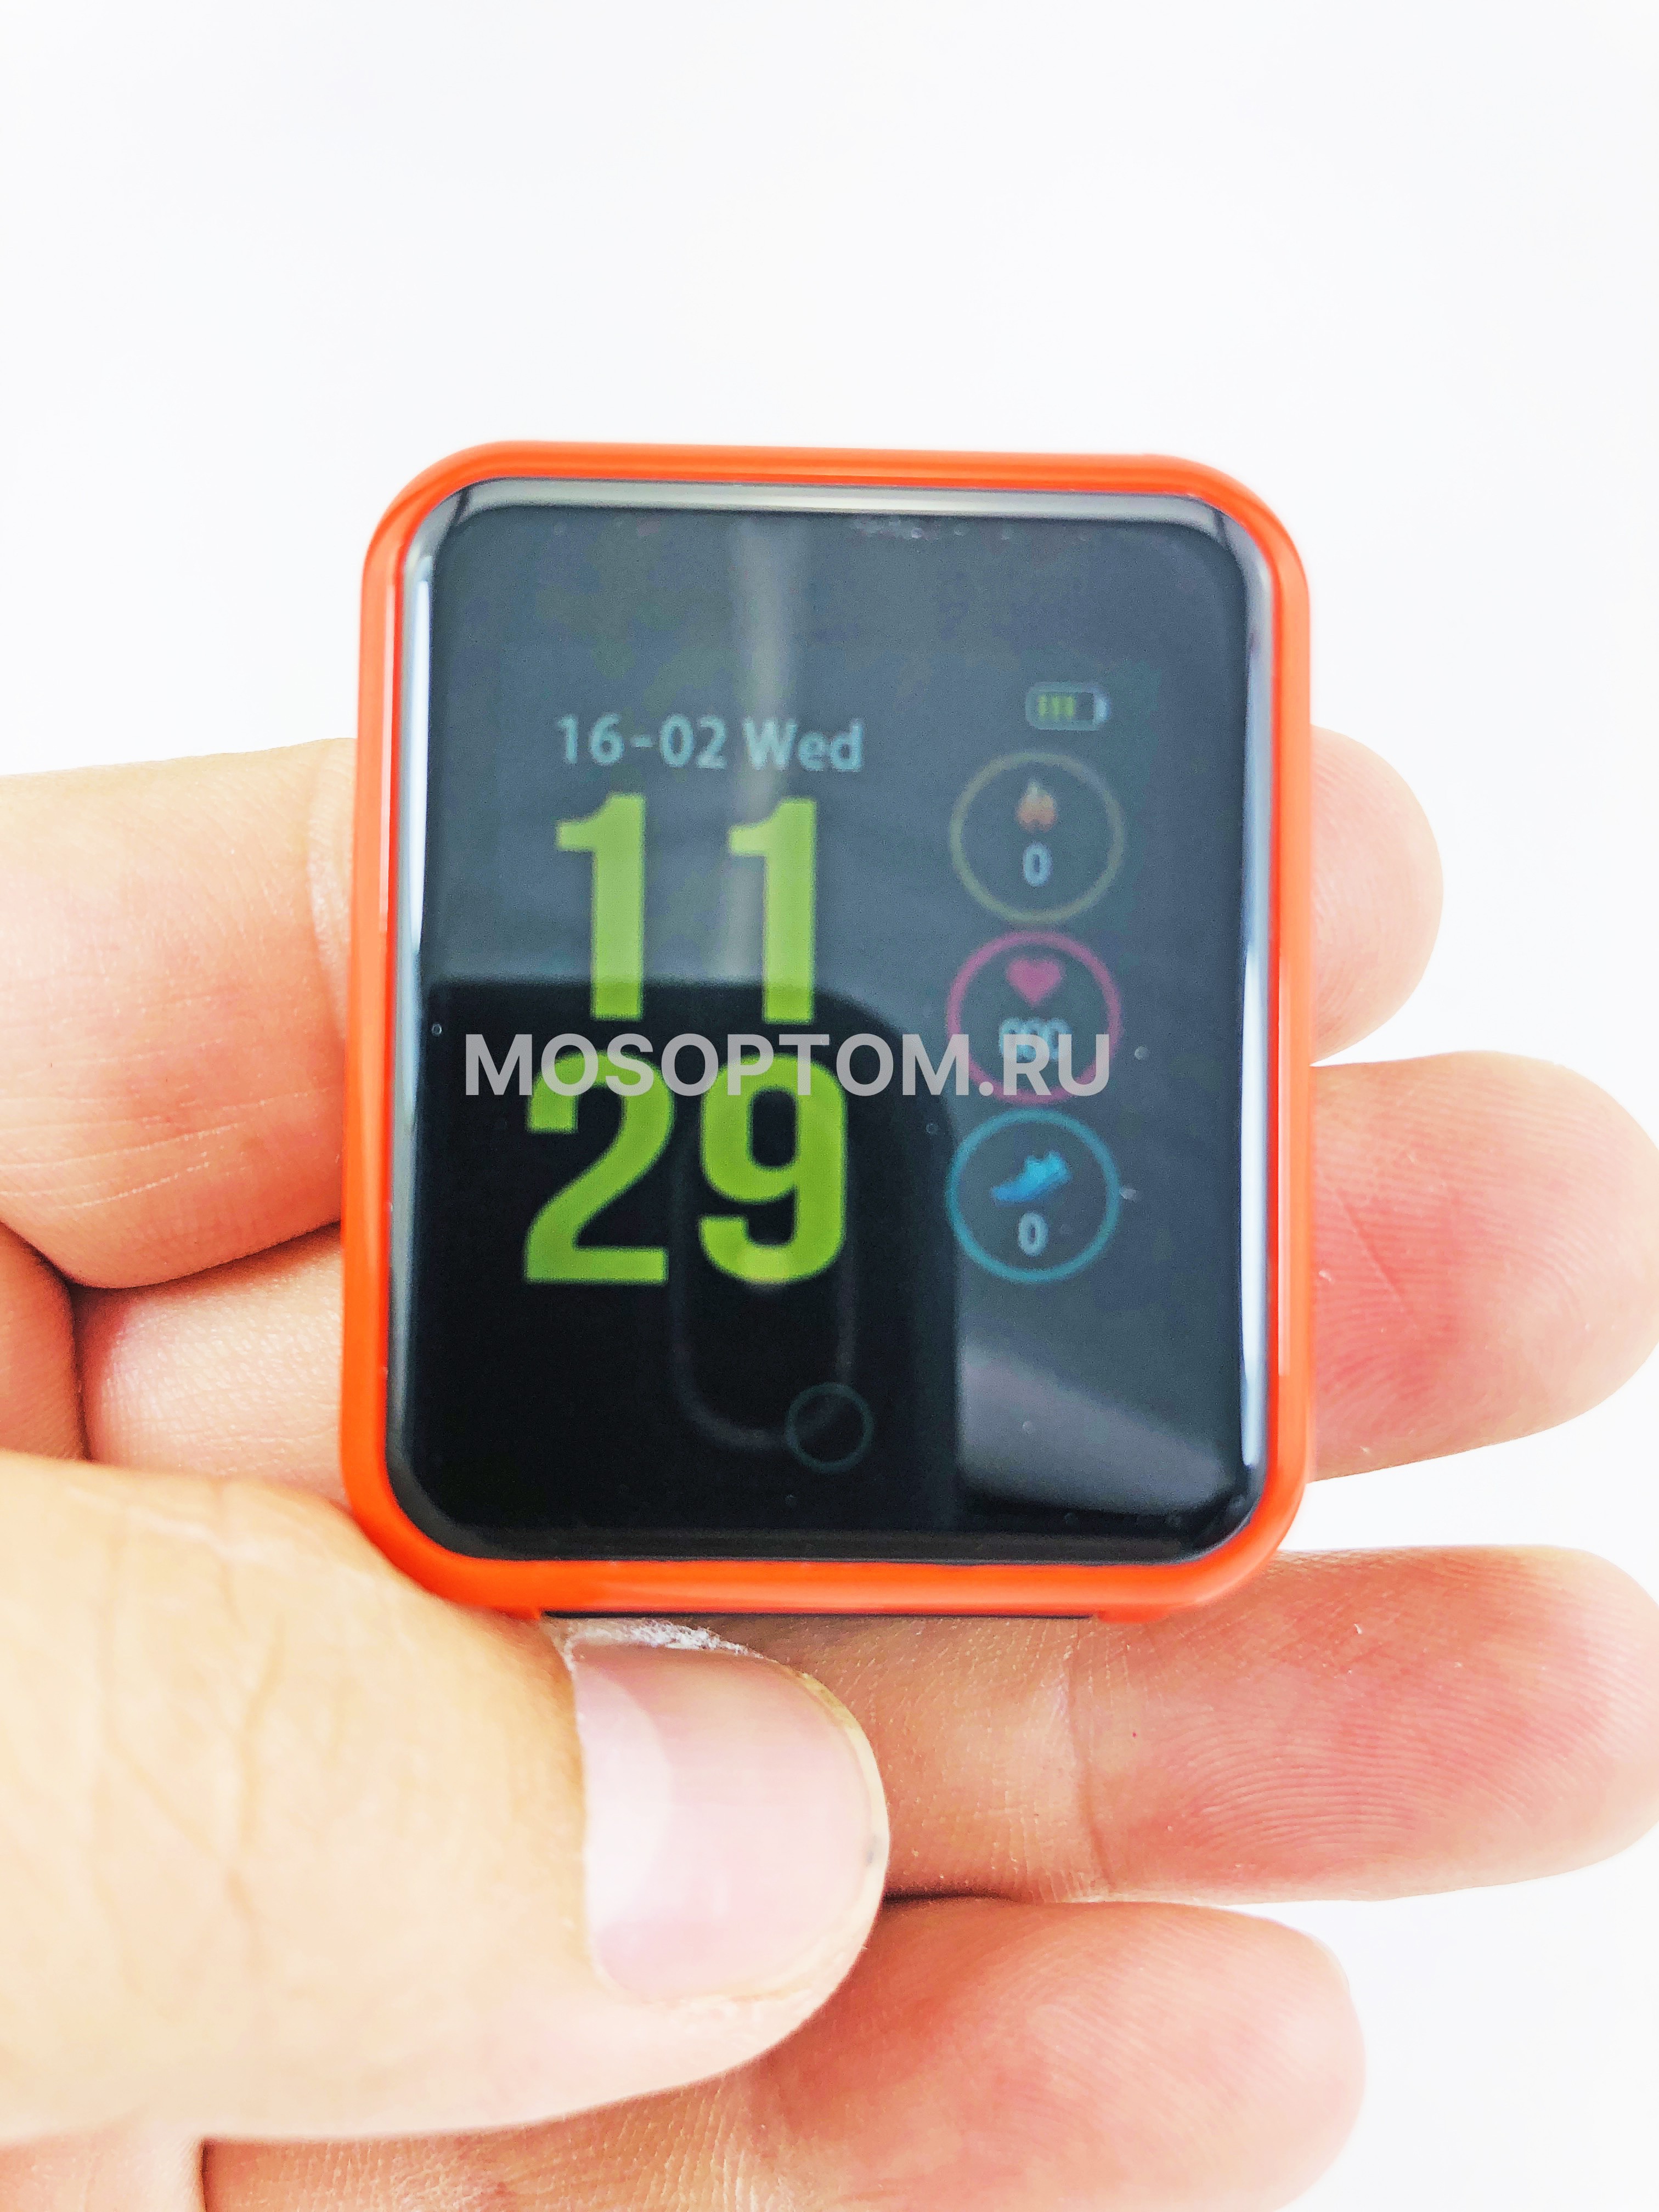 Умные часы Smart Watch N88 оптом